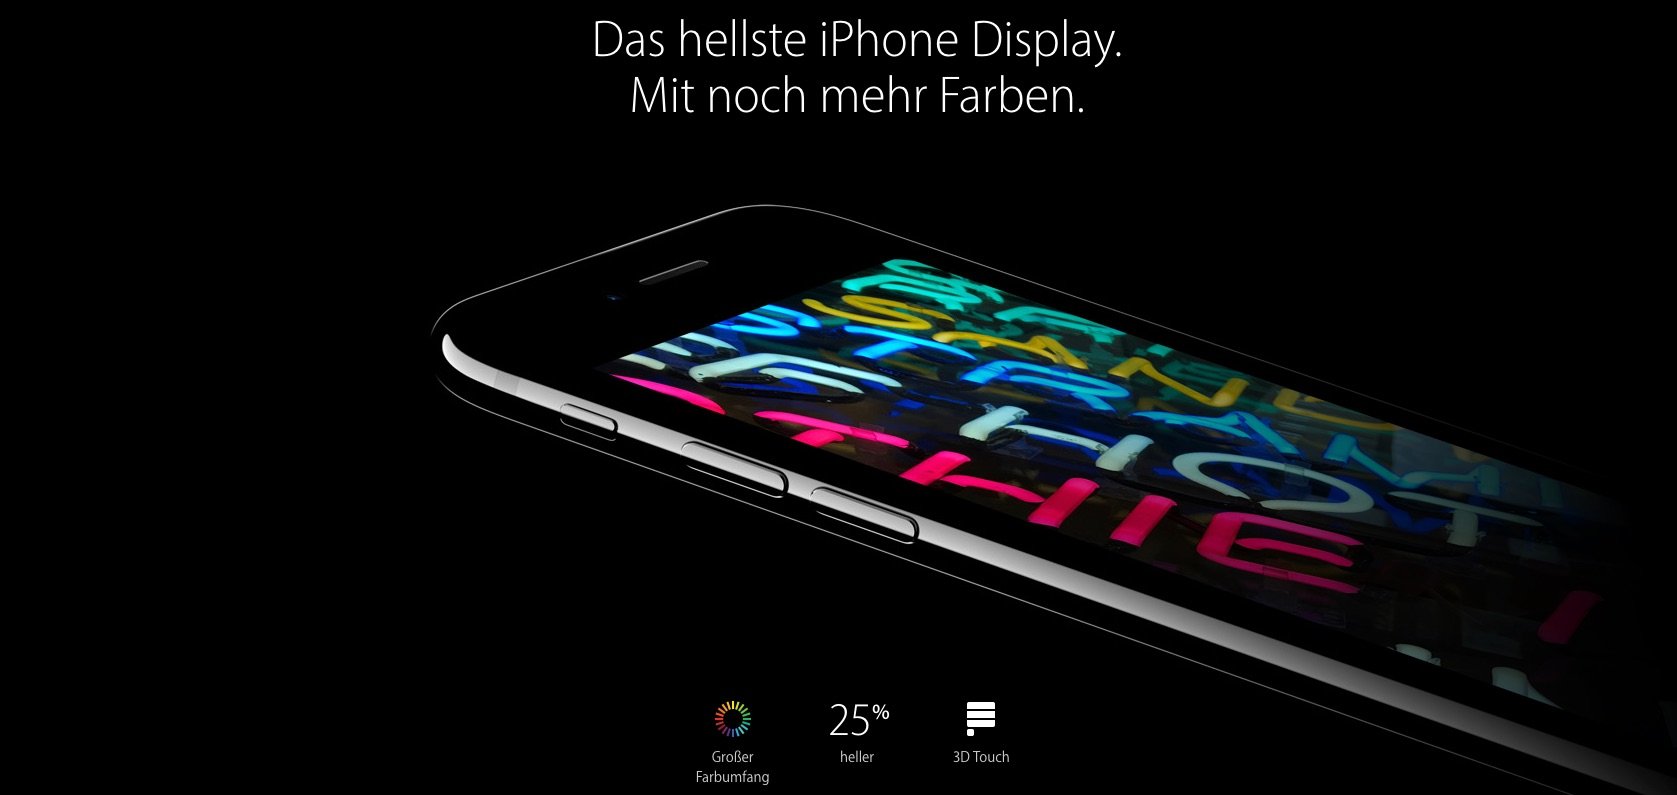 iPhone 7 im Display-Test: iPhone 7 bricht Smartphone Display Rekorde 1